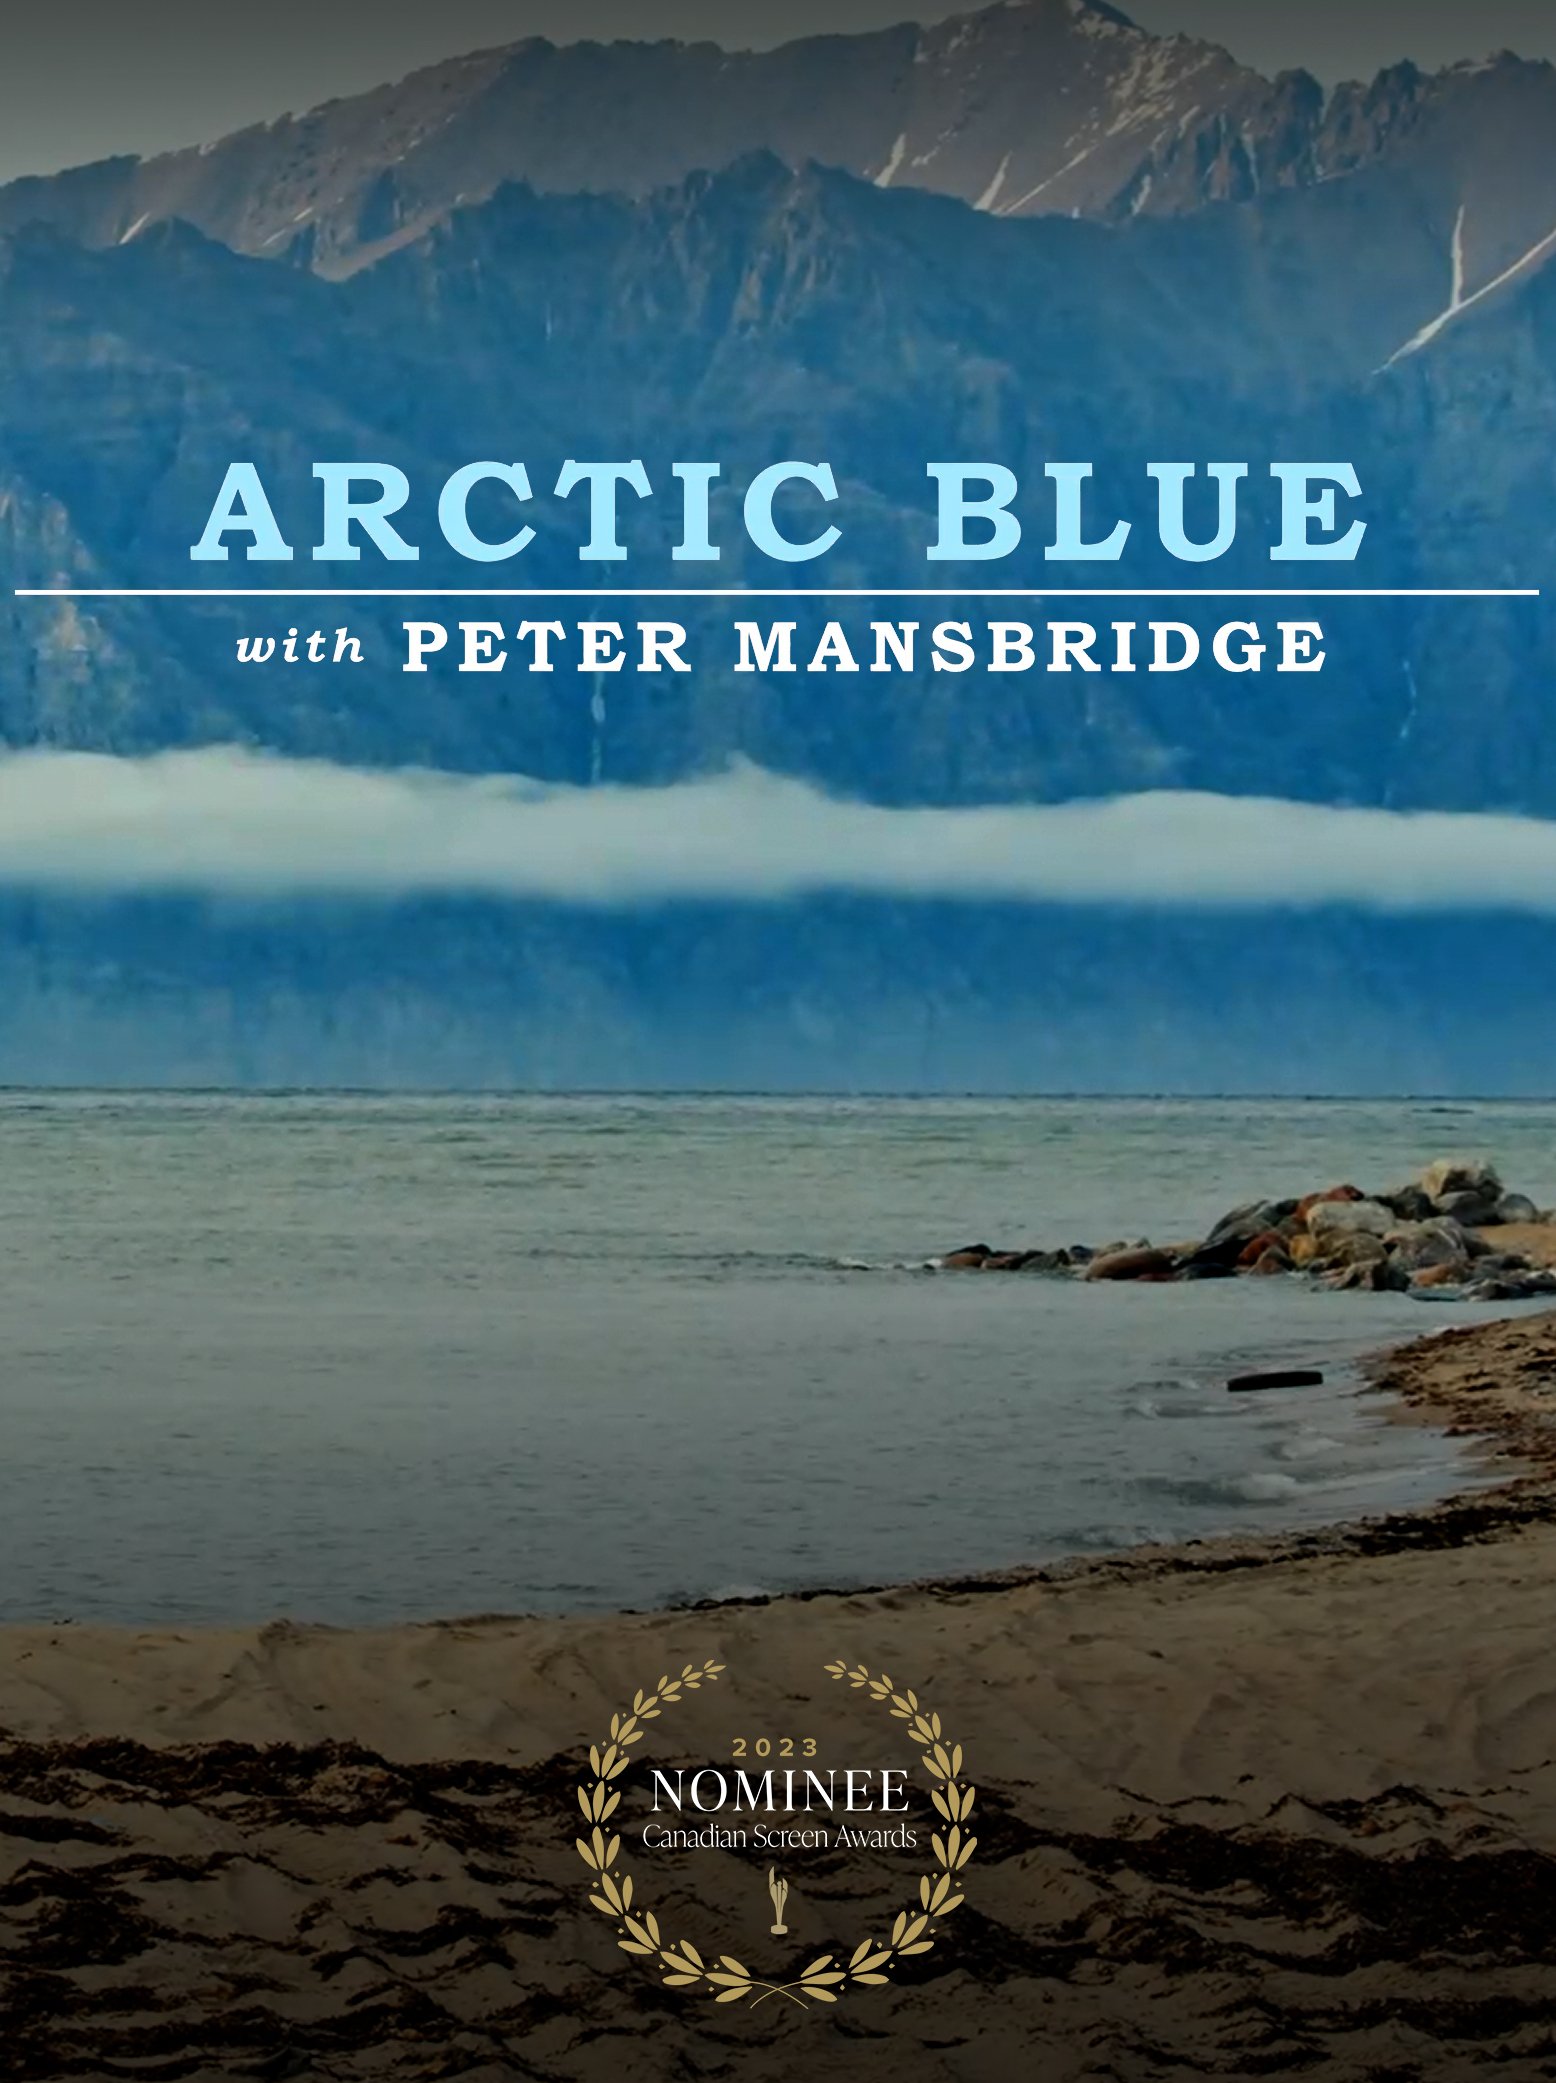 Arctic Blue with Peter Mansbridge